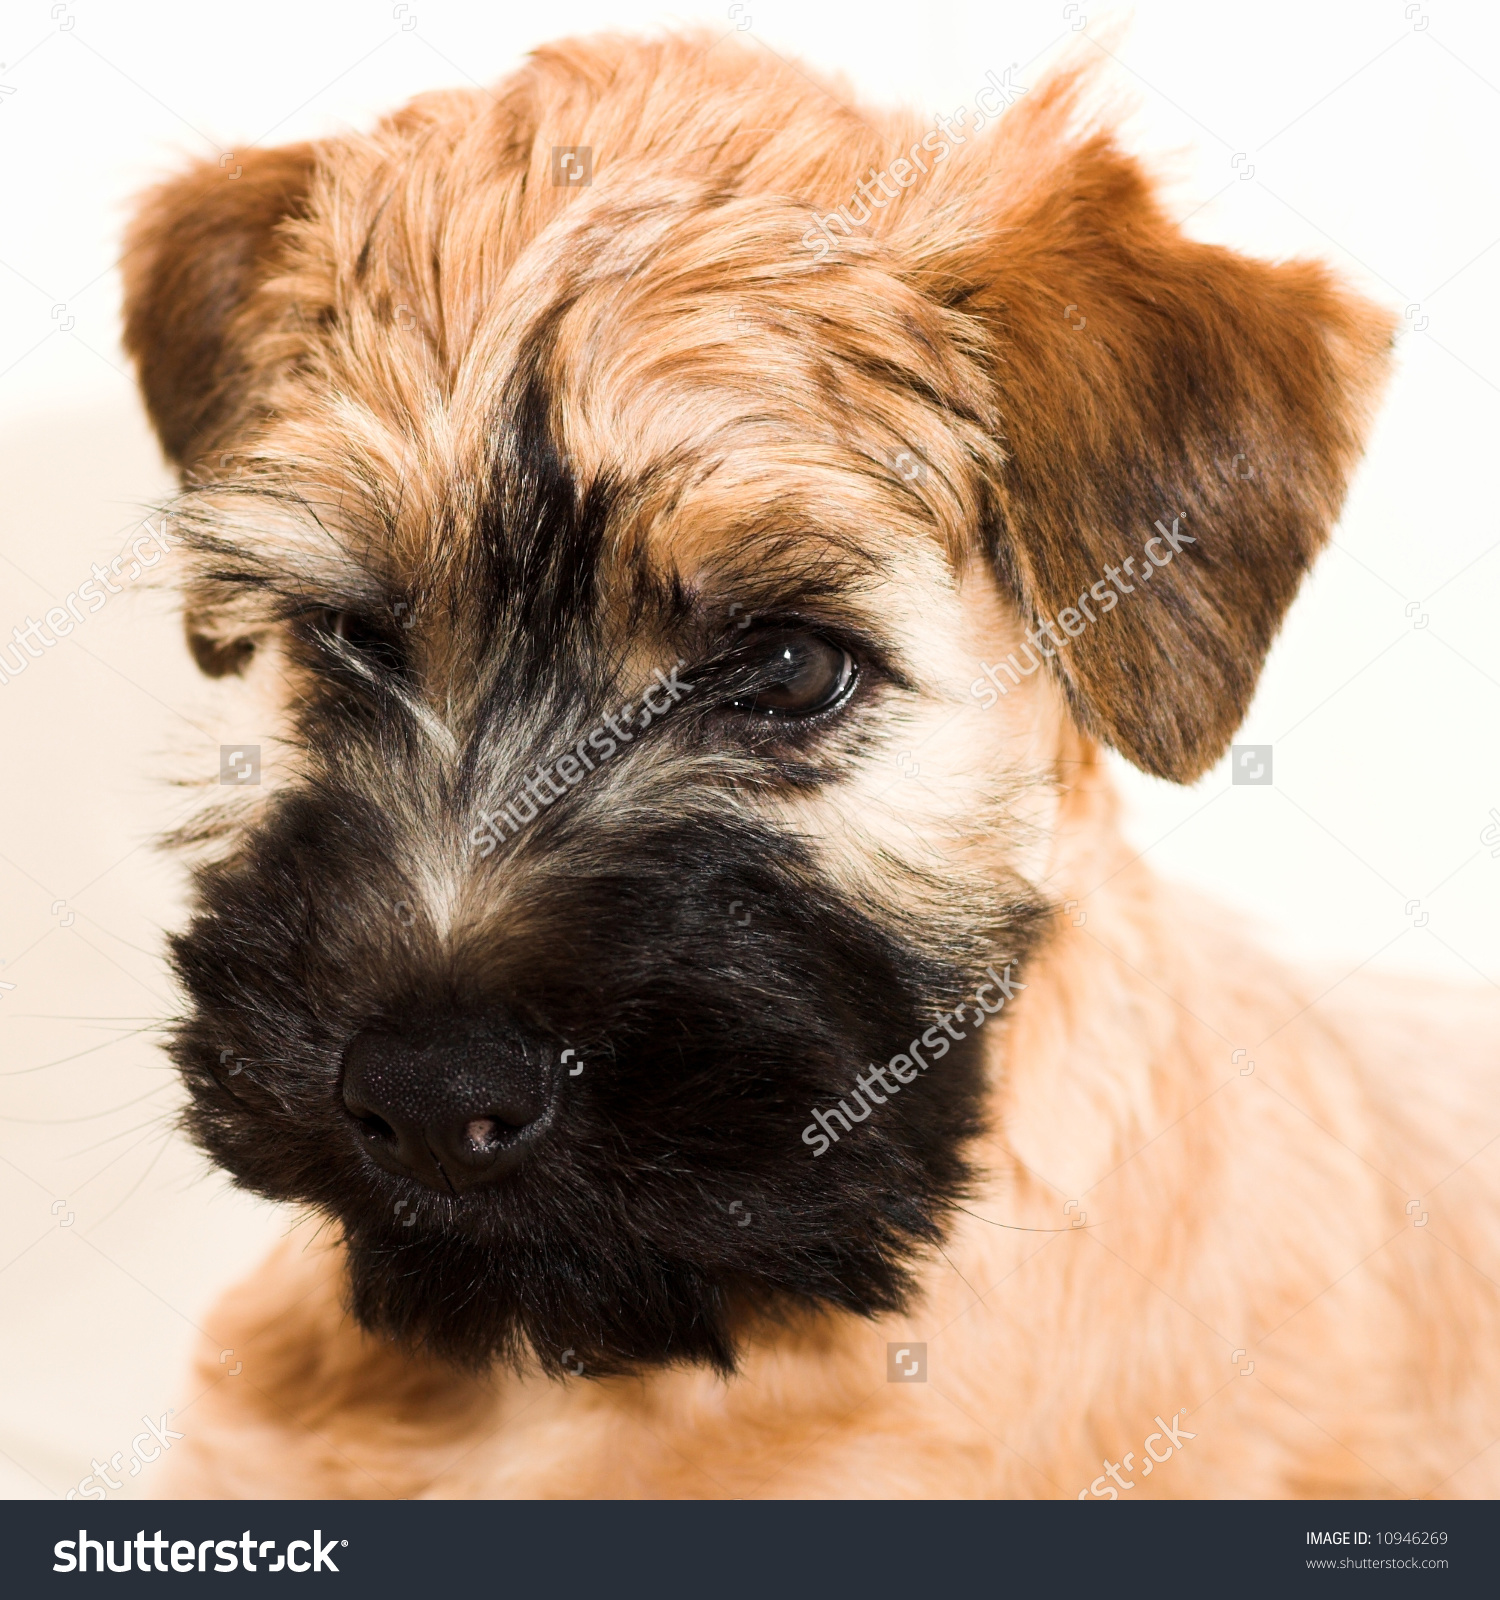 Irish Soft Coated Wheaten Terrier Small Stock Photo 10946269.